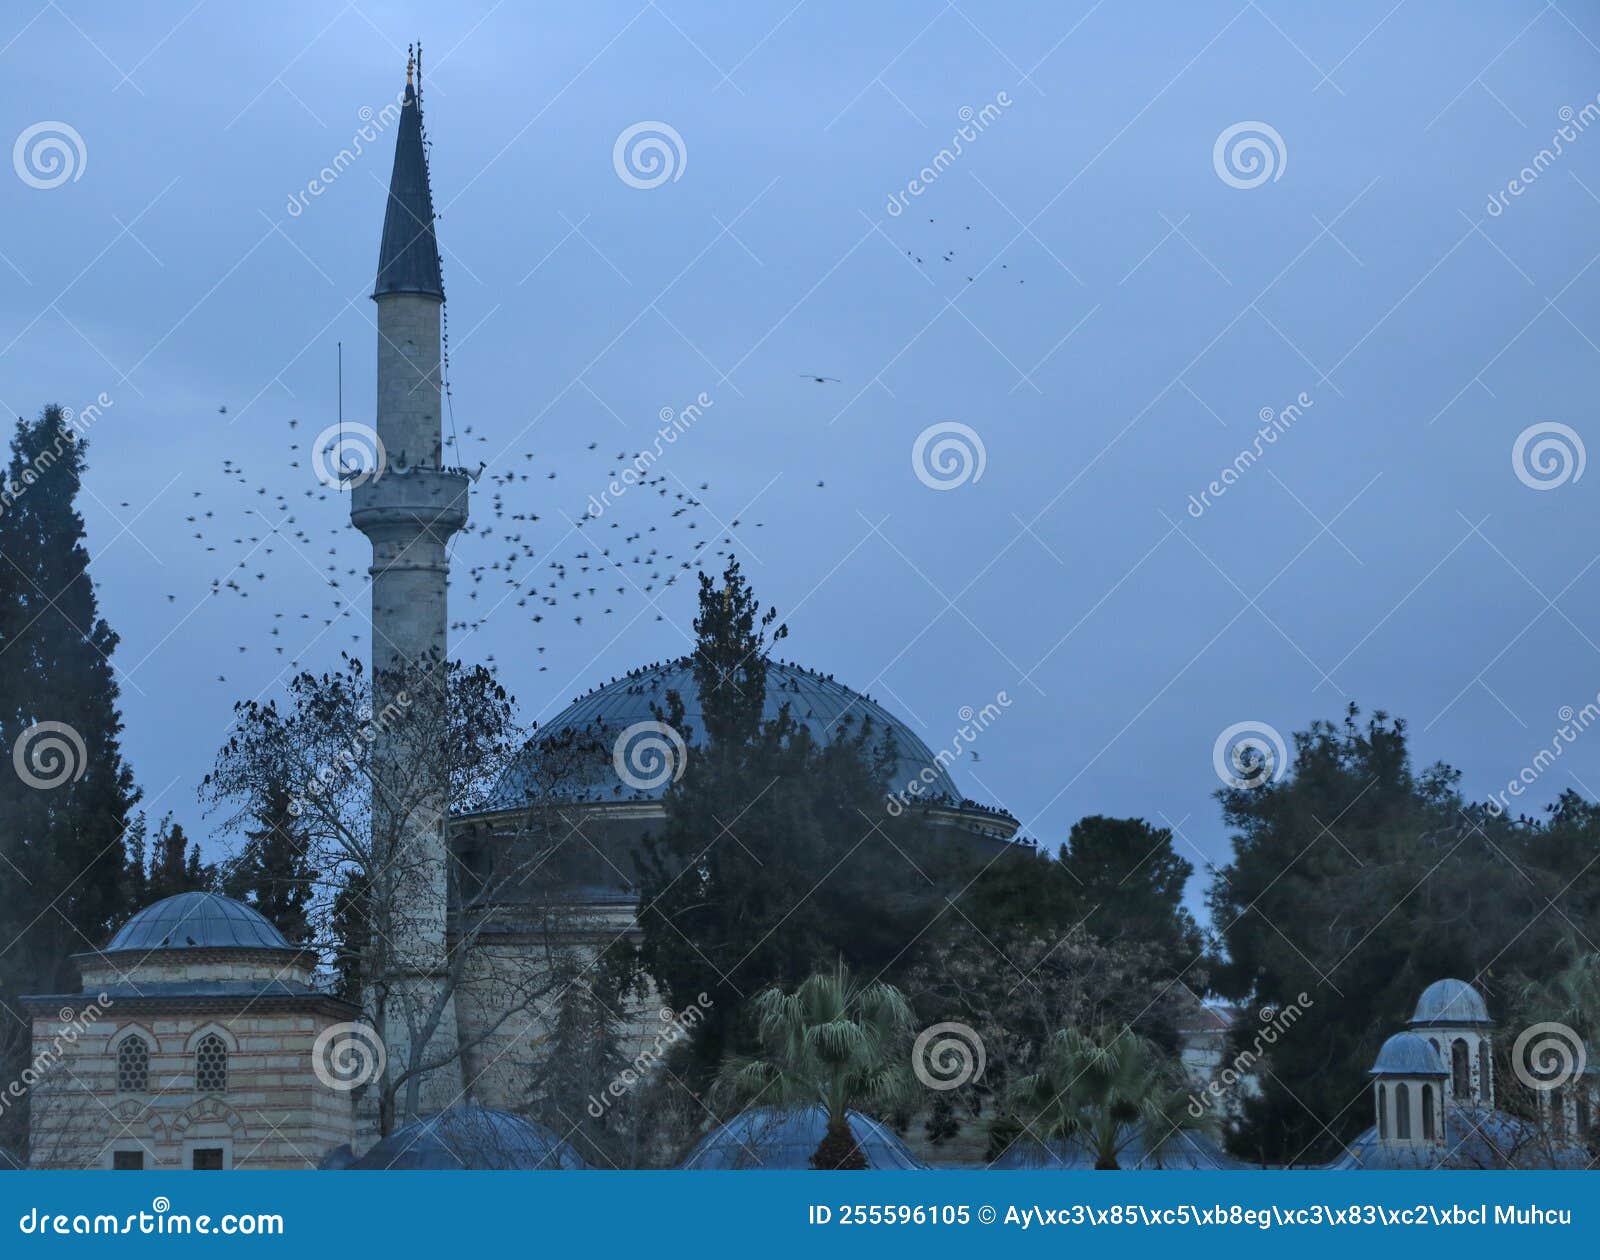 coban mustafa pasha mosque and birds